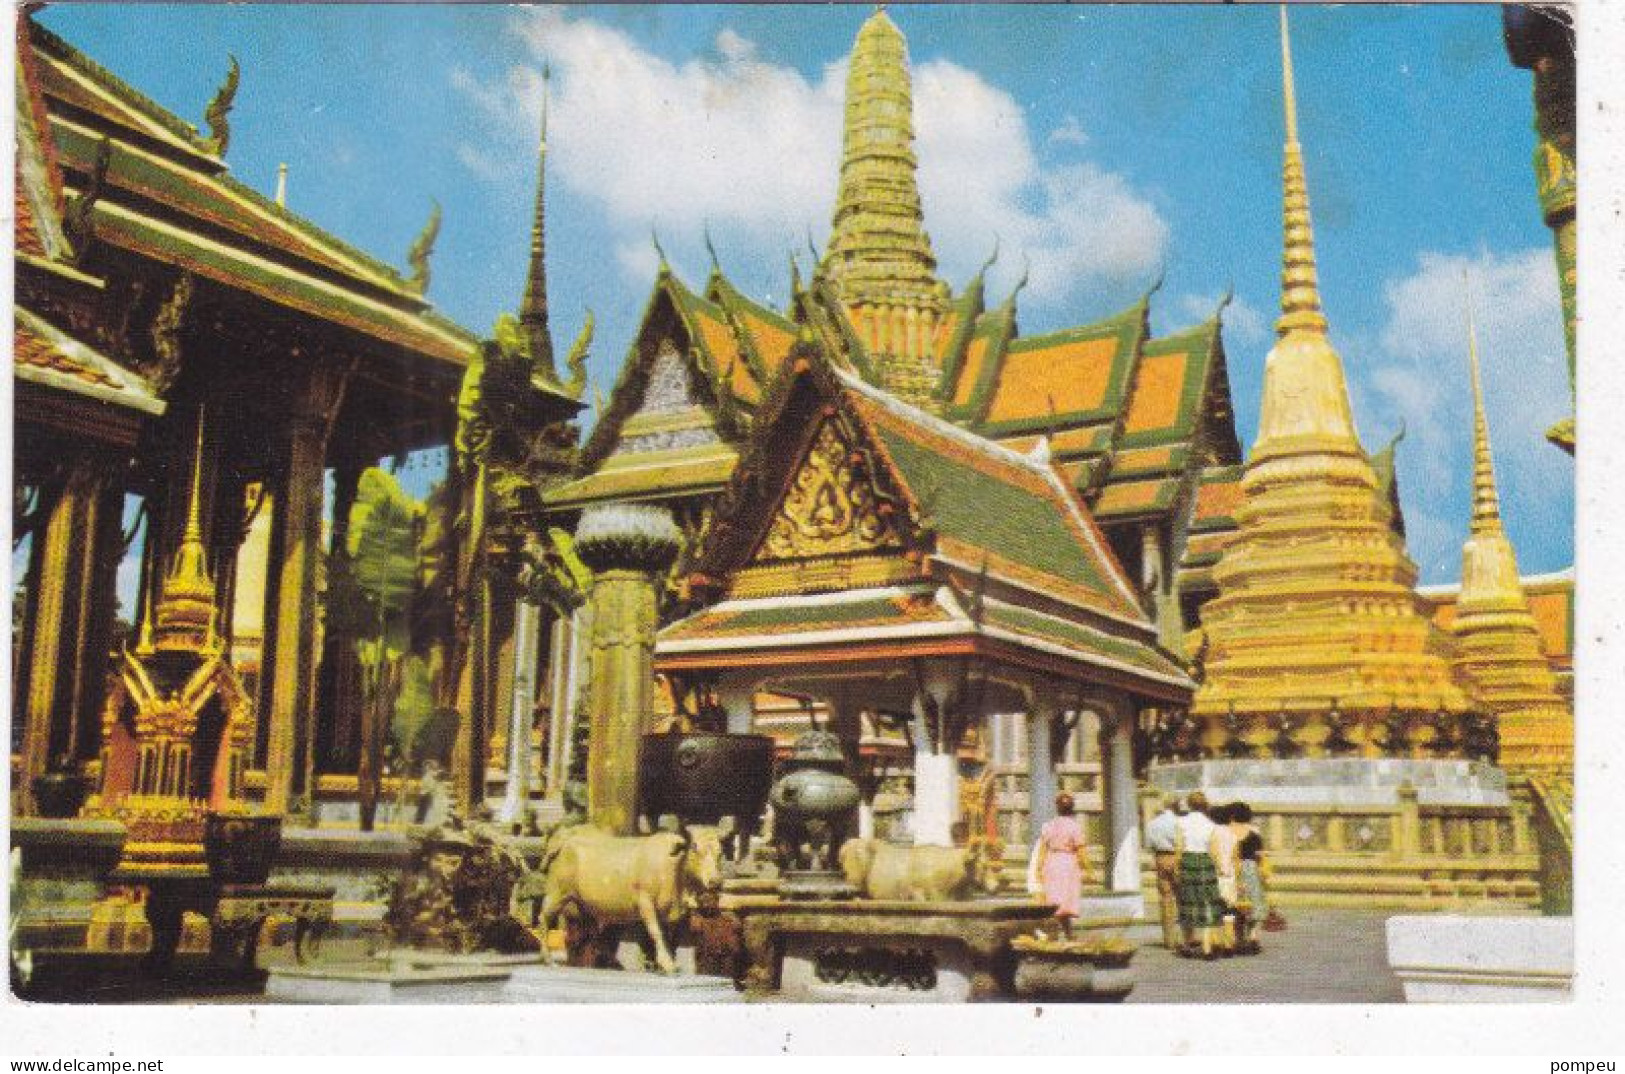 QT - Lot 10 cartes  - THAiLAND:  Bangkok - views of Temples  (neuf)